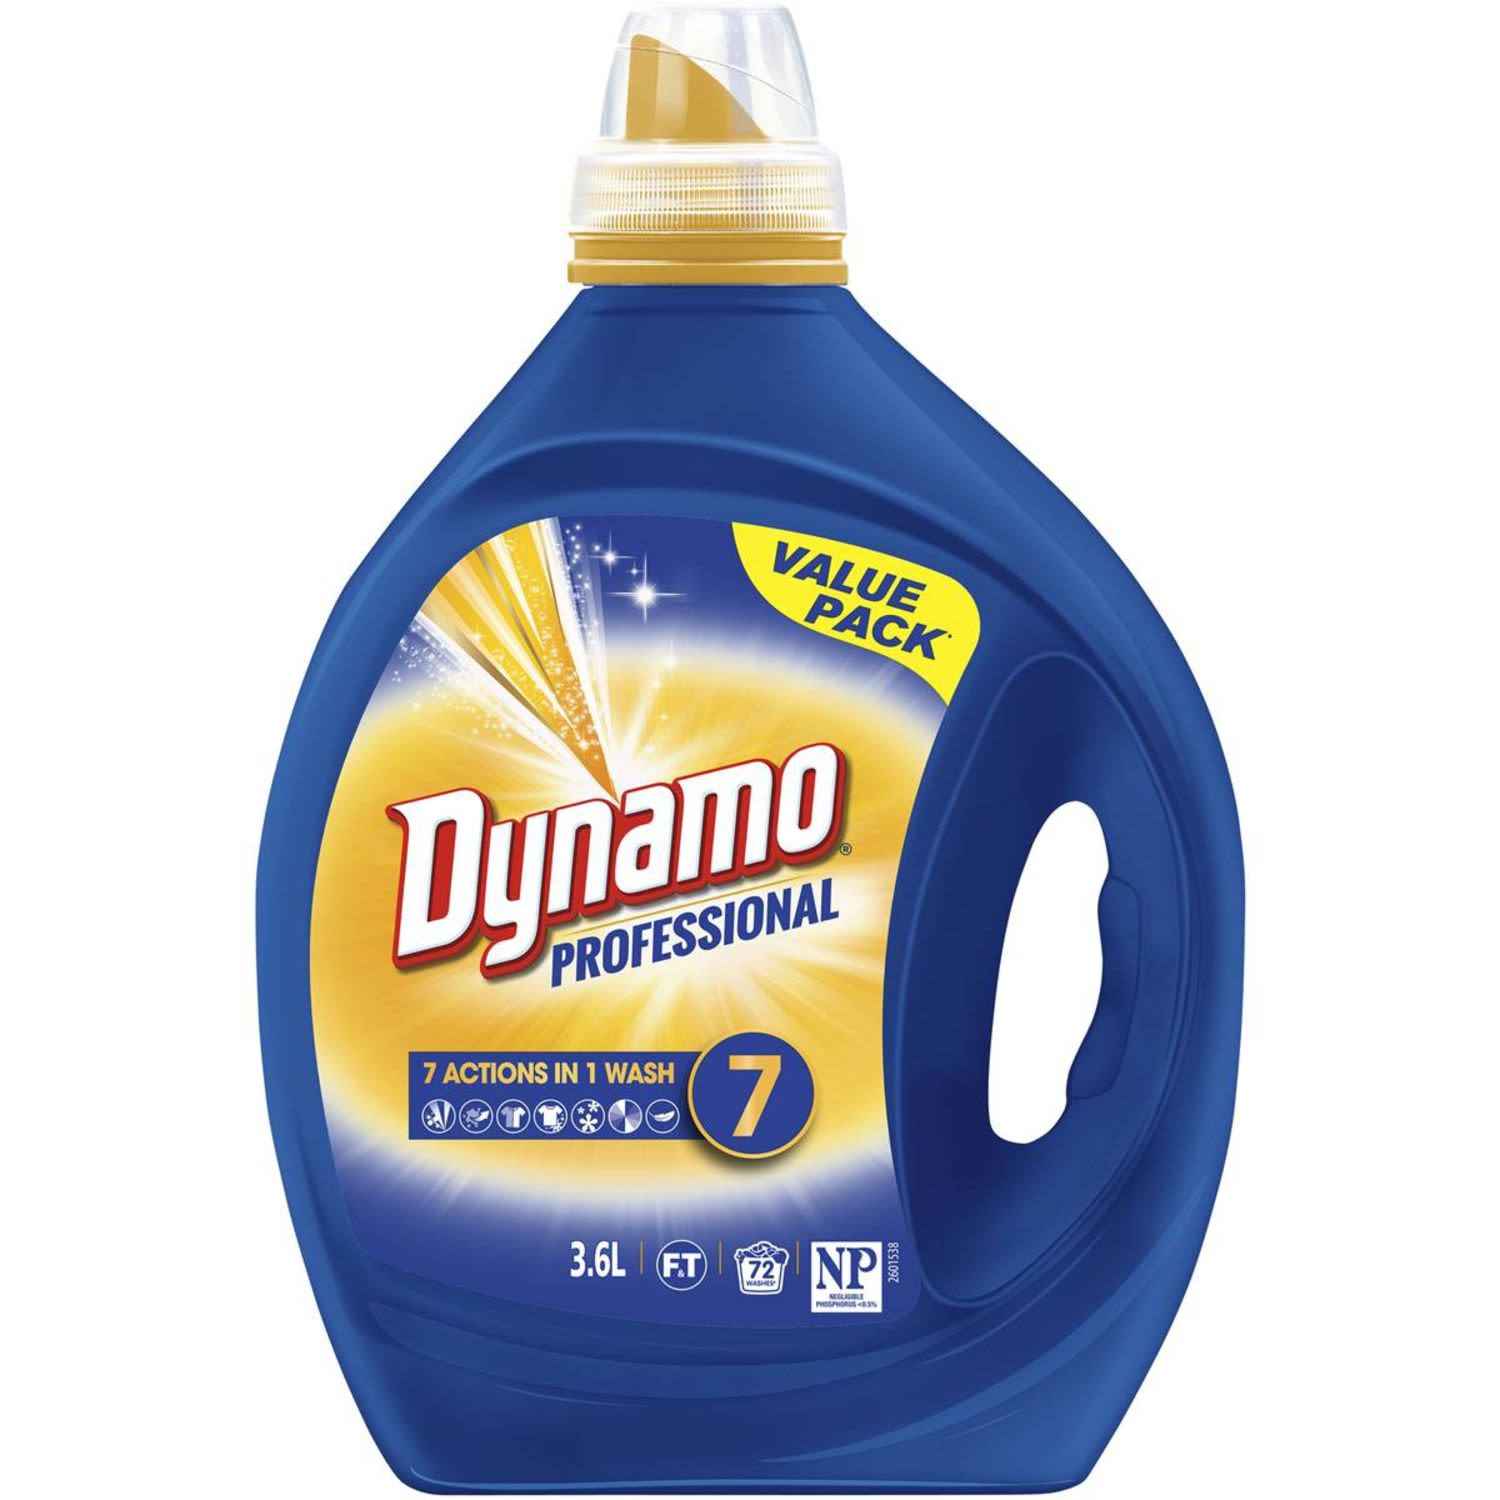 Dynamo Professional 7 in 1 Laundry Detergent Liquid, 3.6 Litre